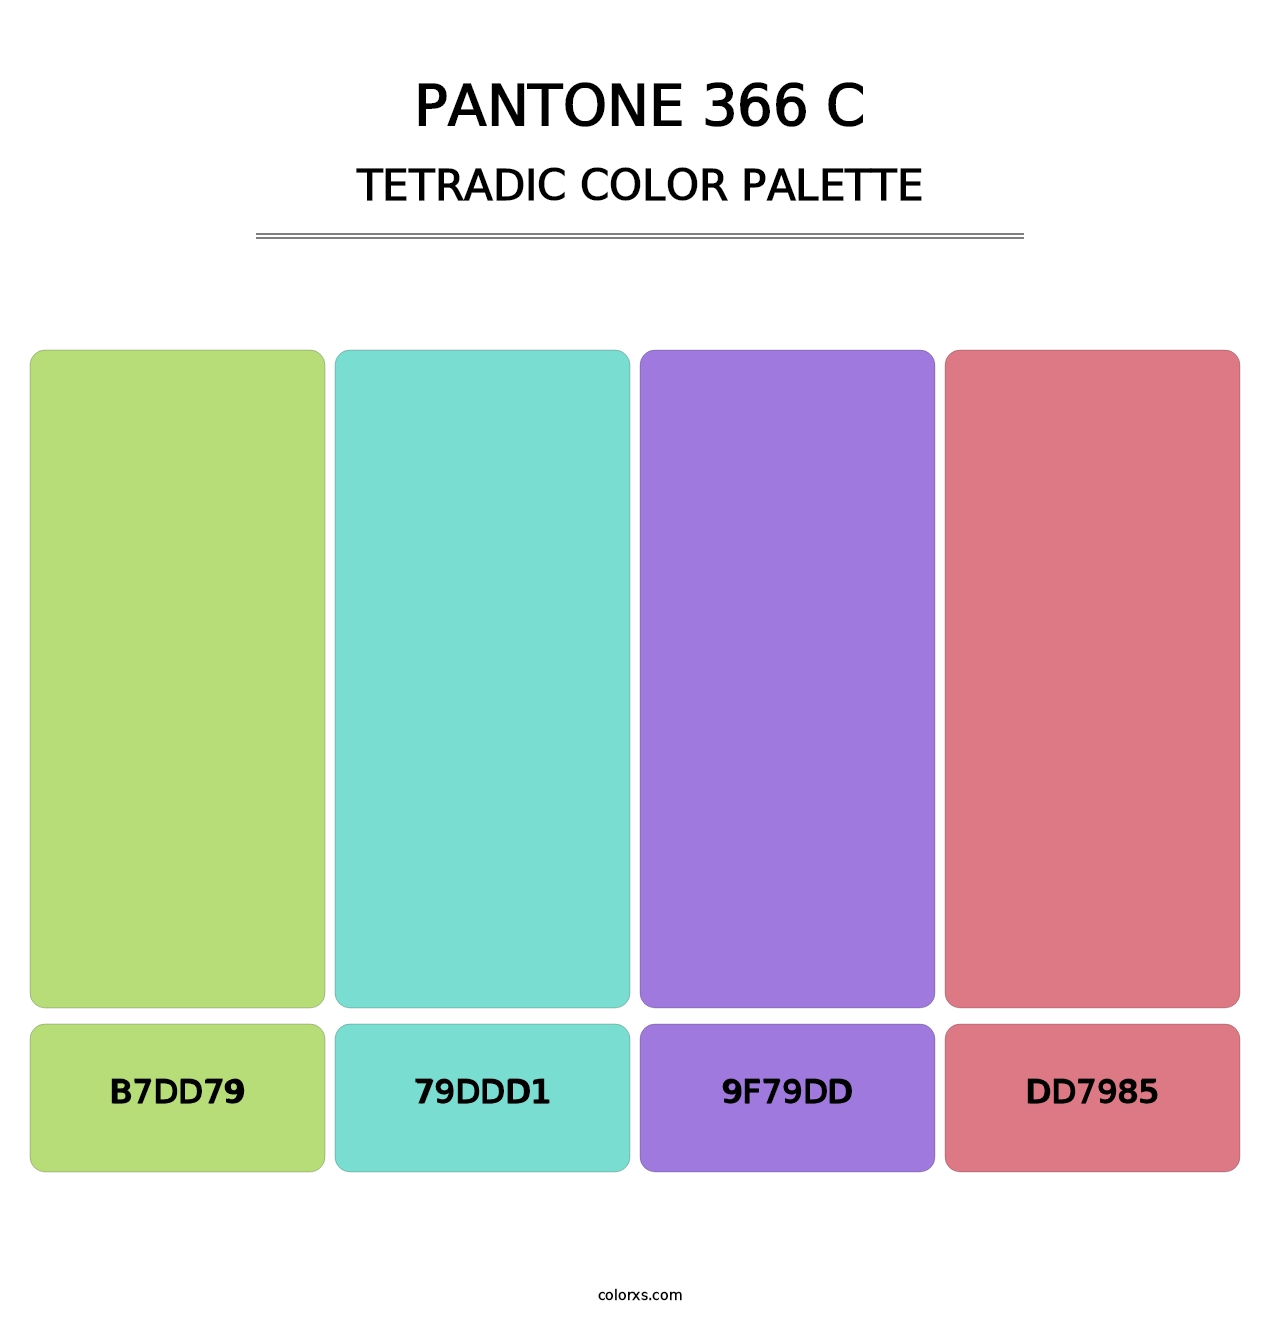 PANTONE 366 C - Tetradic Color Palette